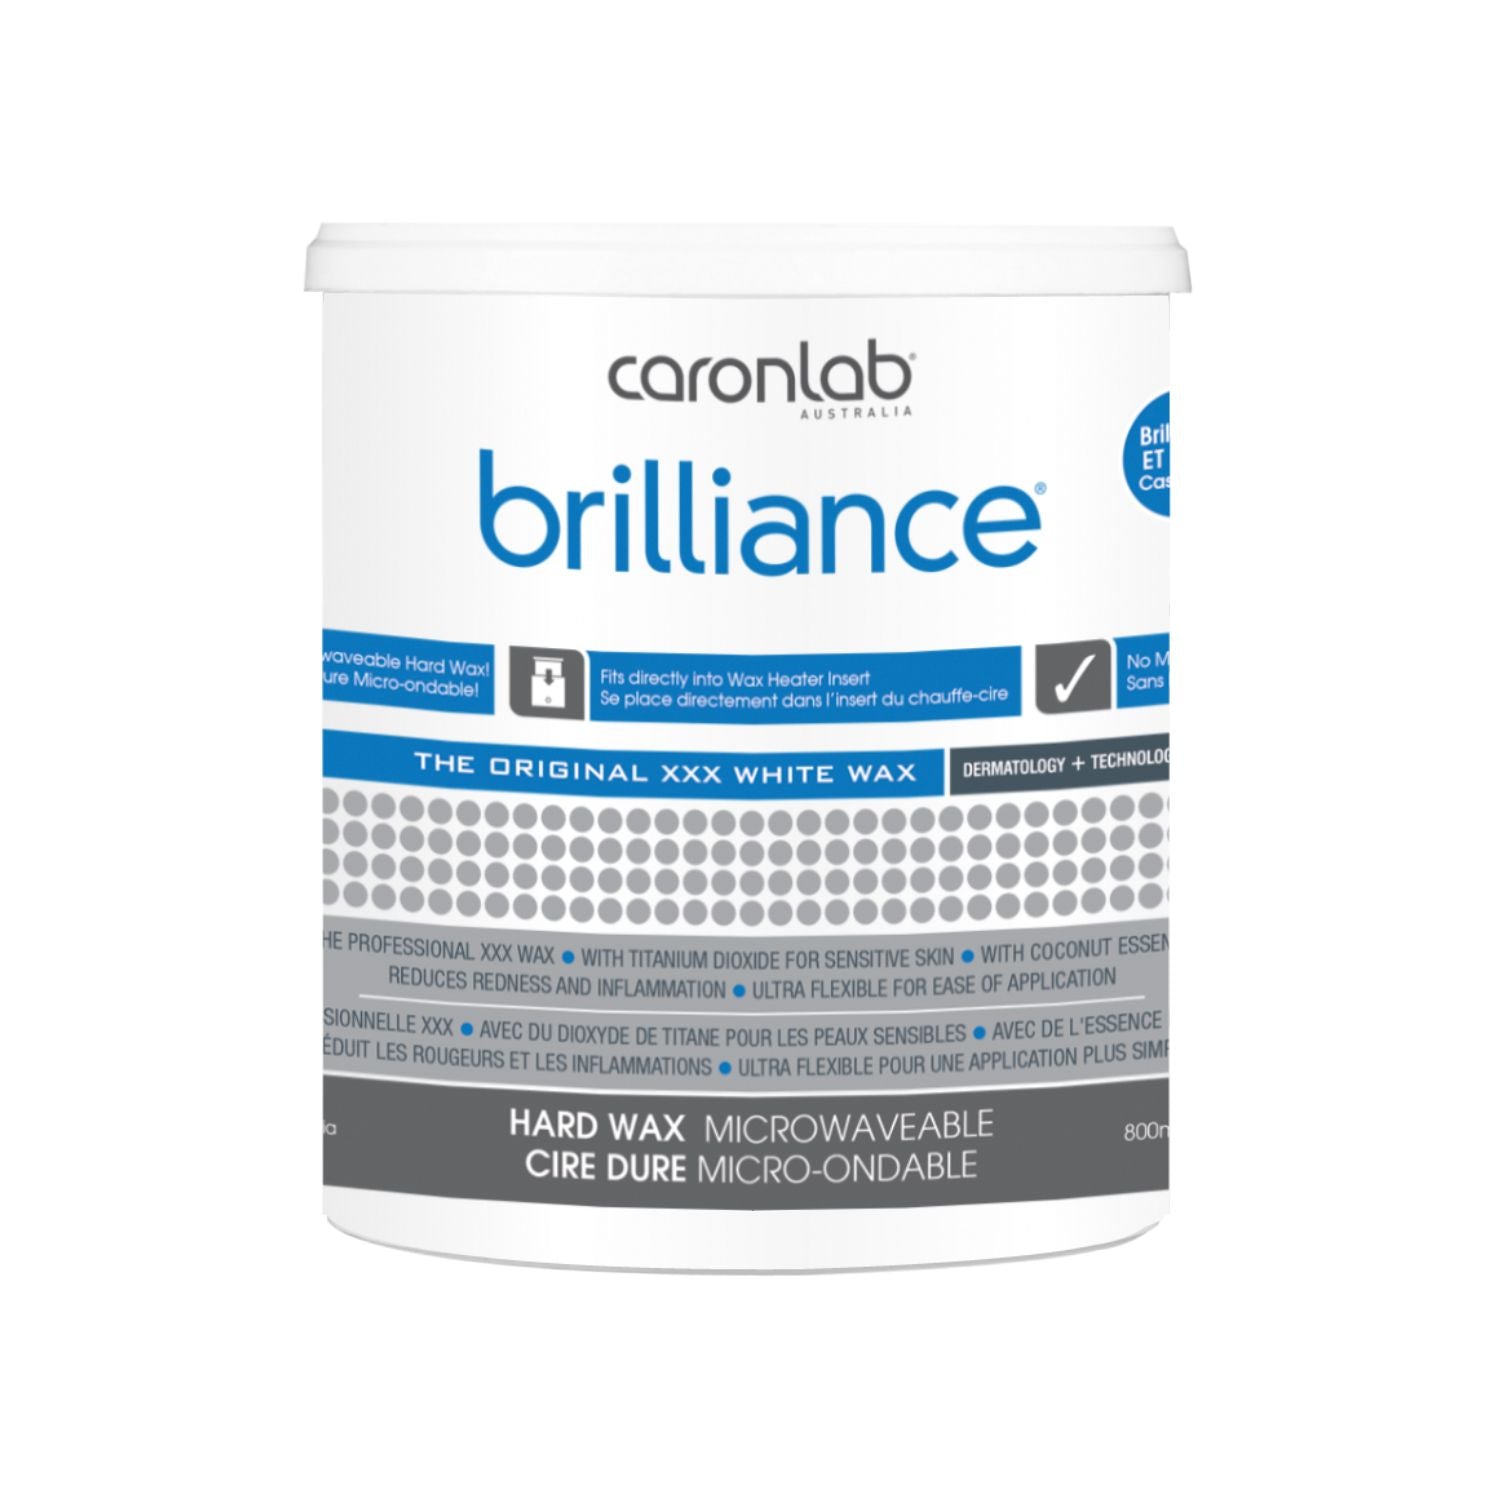 Caronlab Brilliance Hard Wax - Microwaveable 800g